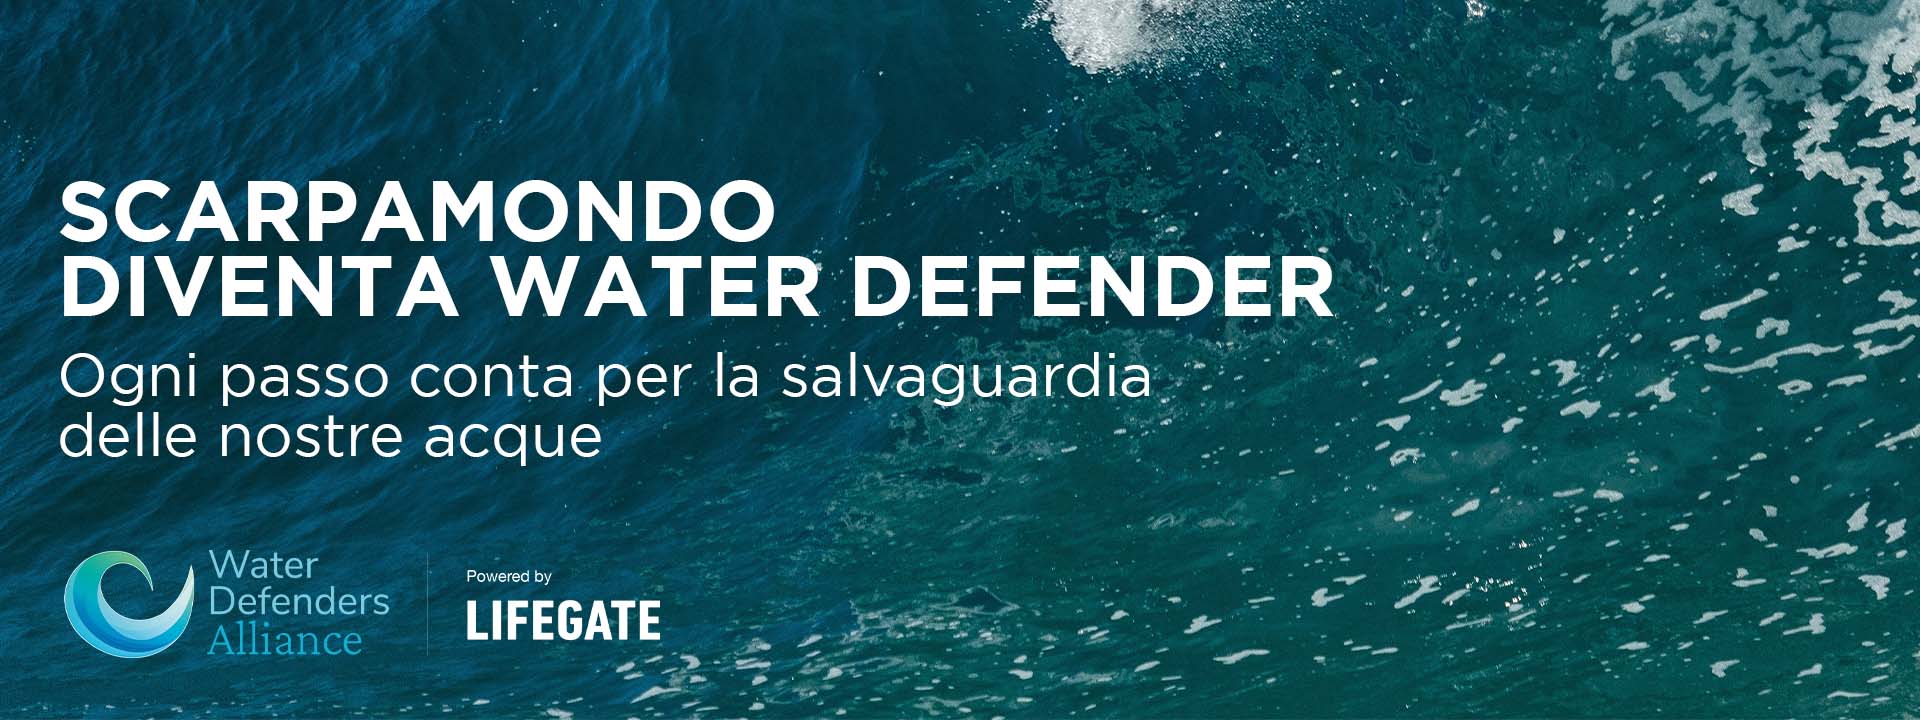 Water defenders alliance